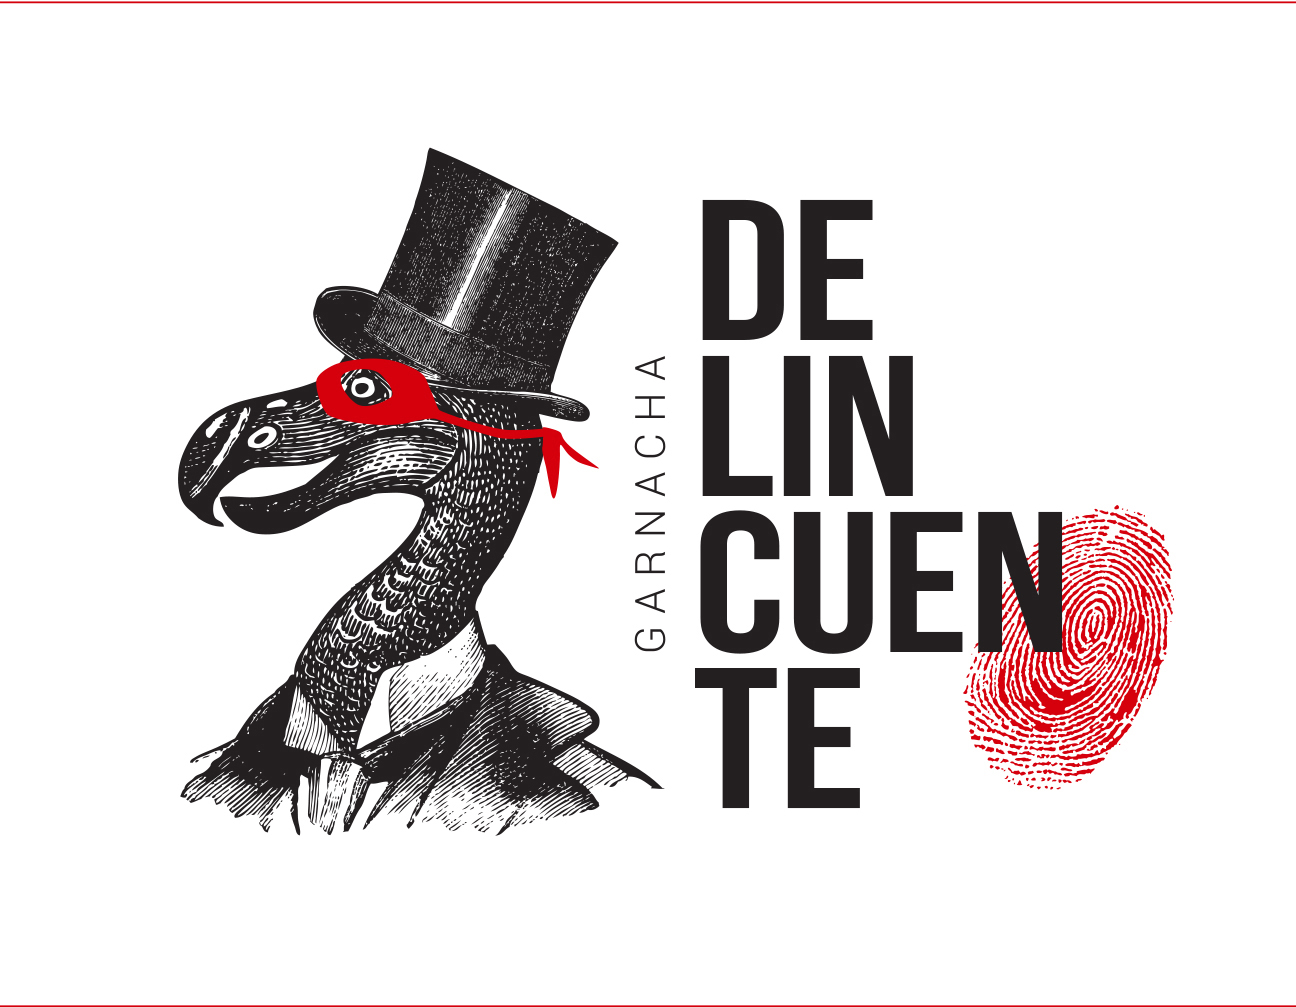 Delincuente - Garnacha label